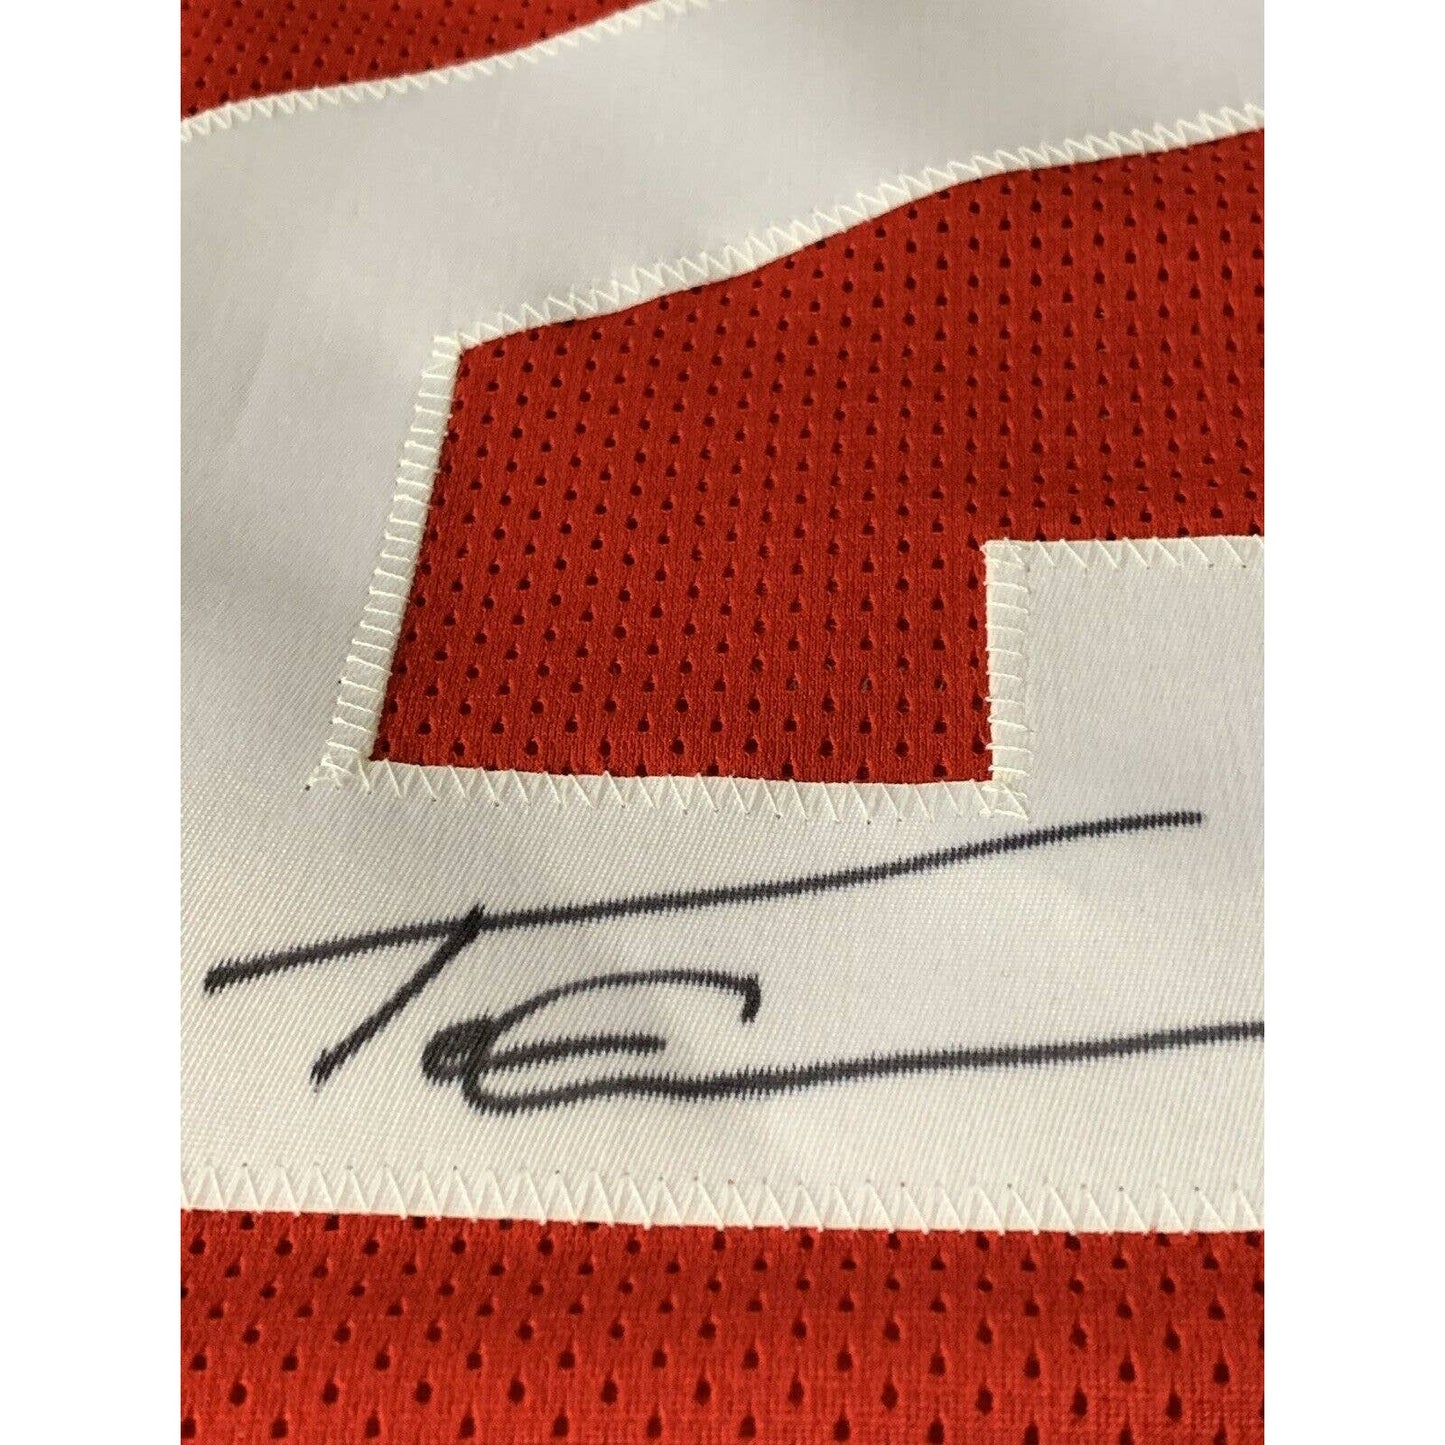 Tevin Coleman Autographed/Signed Jersey LEAF COA Atlanta Falcons - TreasuresEvolved